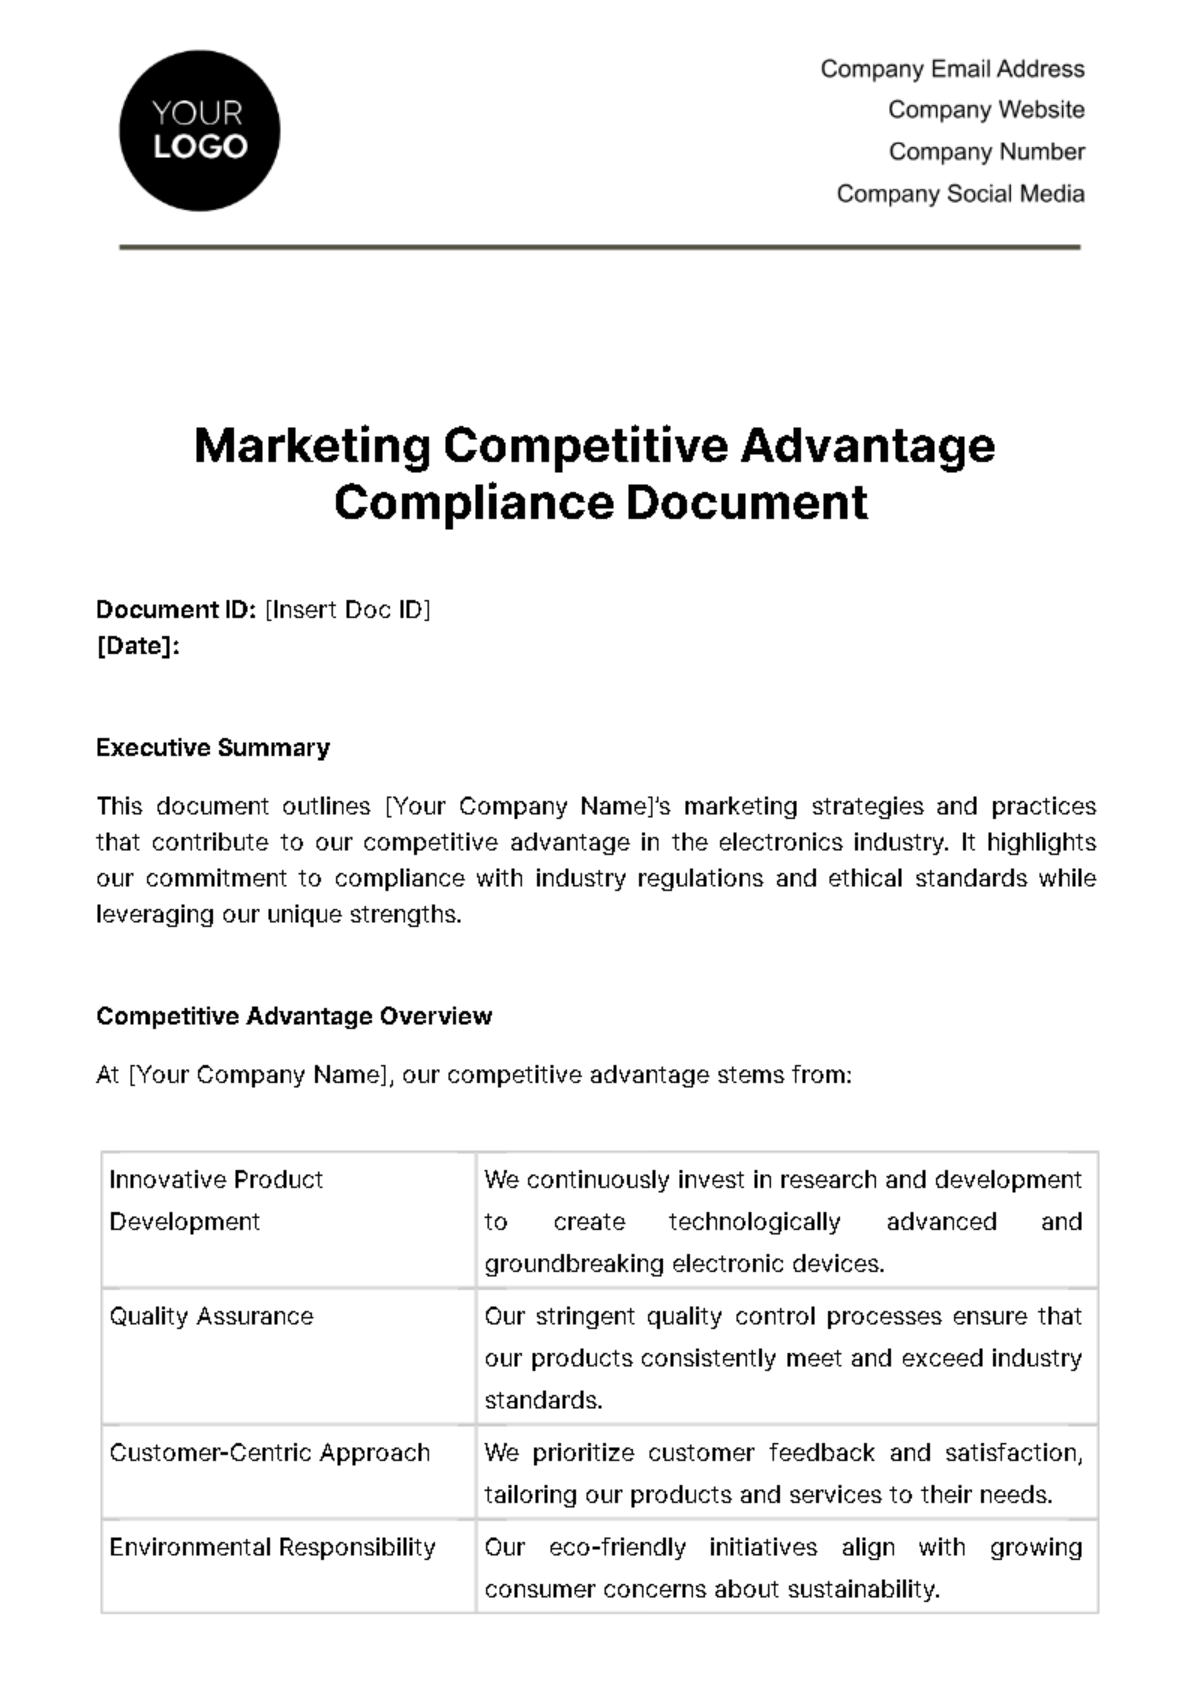 Marketing Competitive Advantage Compliance Document Template